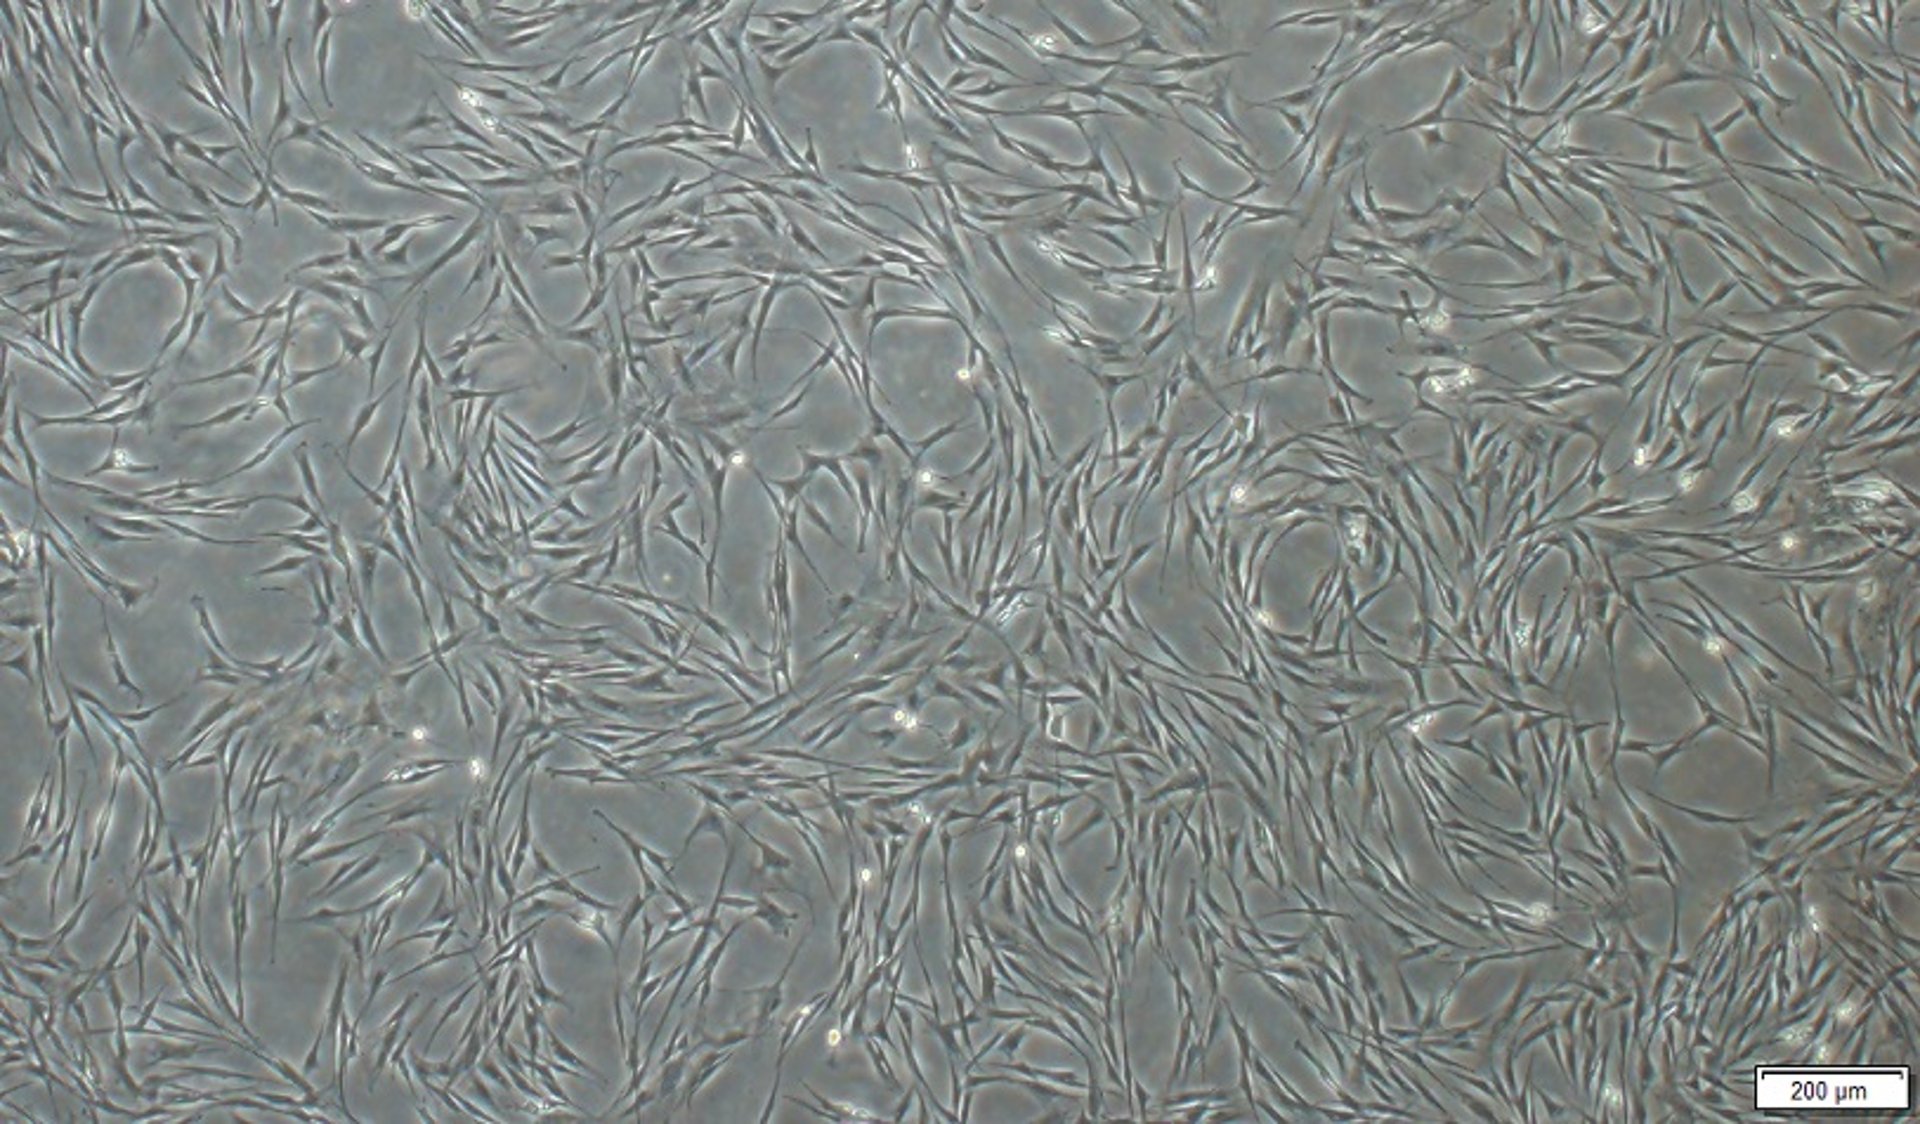 Mesenchymal stem cells, horse